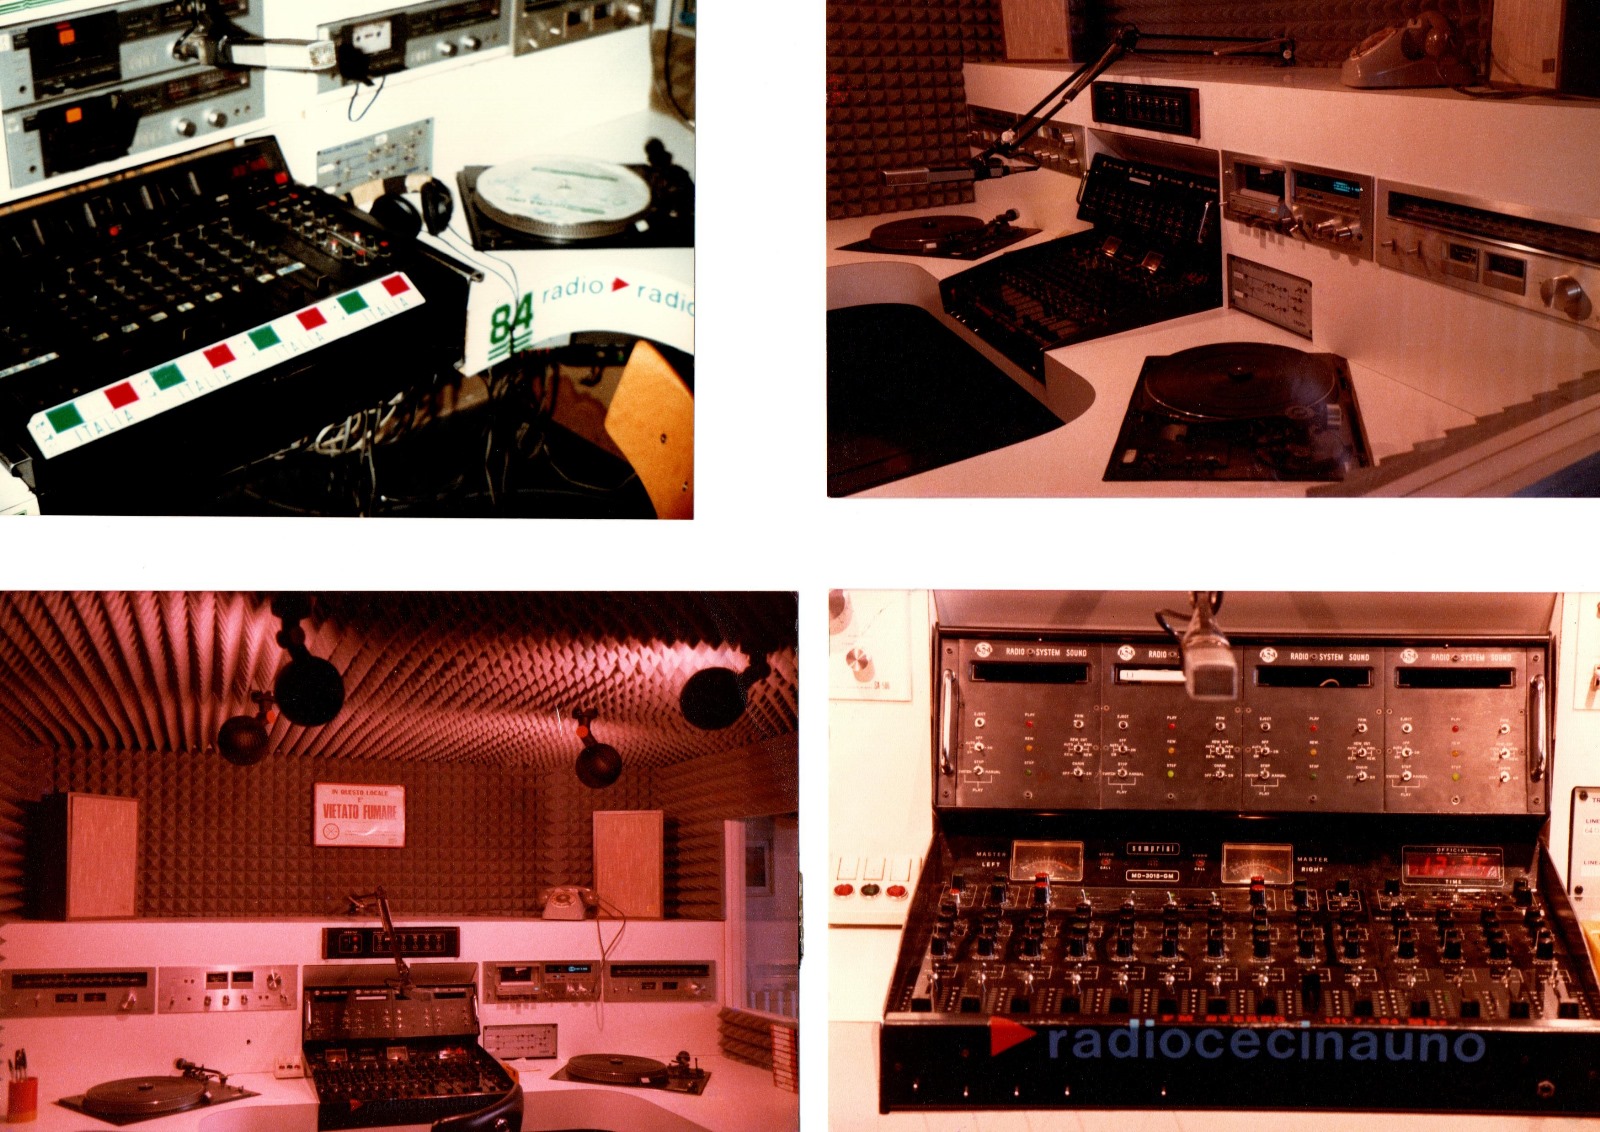 Old Radio Stations Reunion